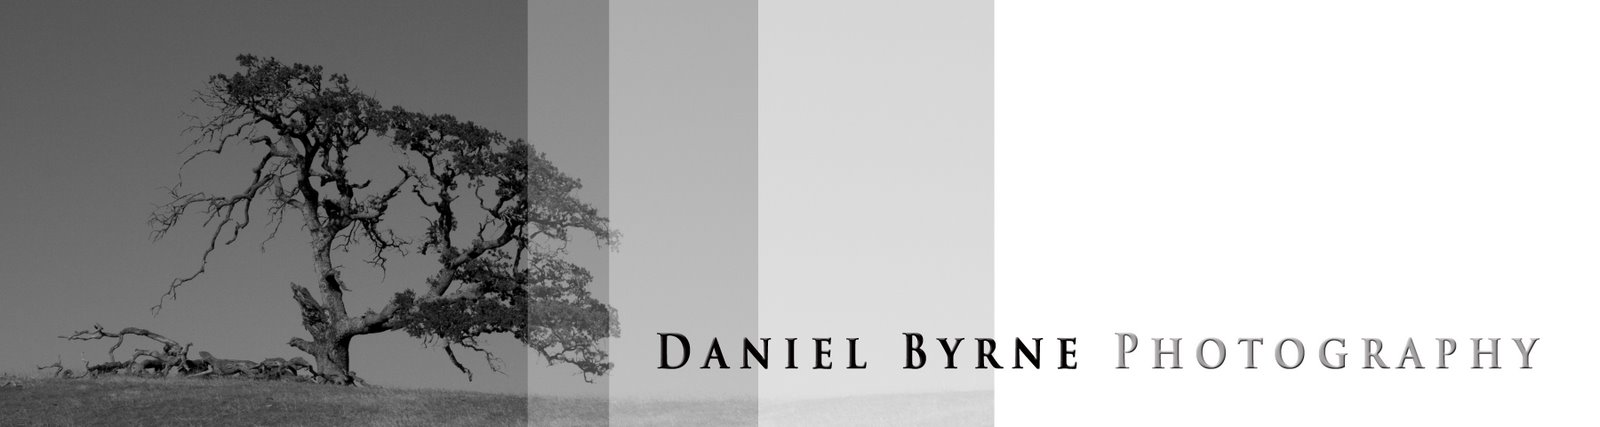 Daniel Byrne Photography